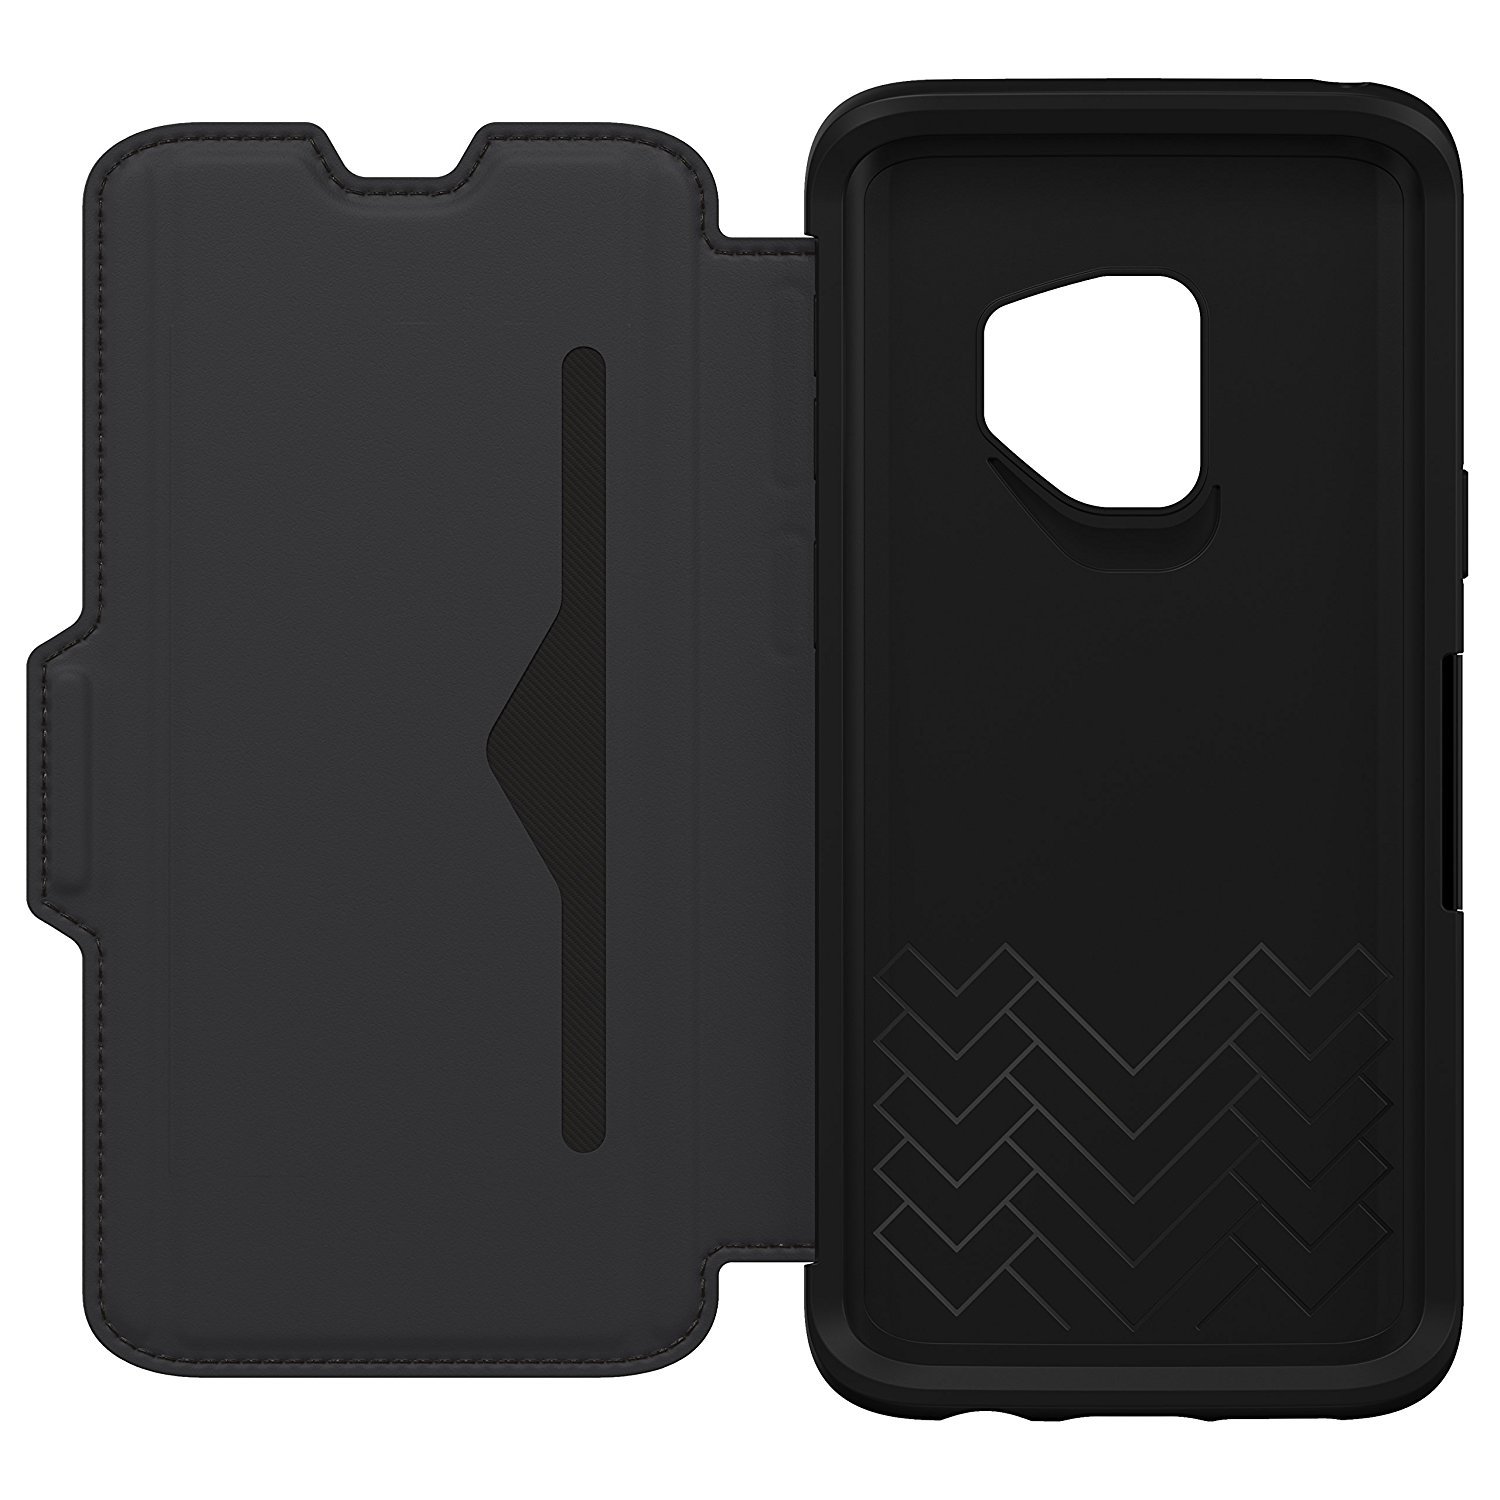 OtterBox Strada Samsung Galaxy S9 Case - Black